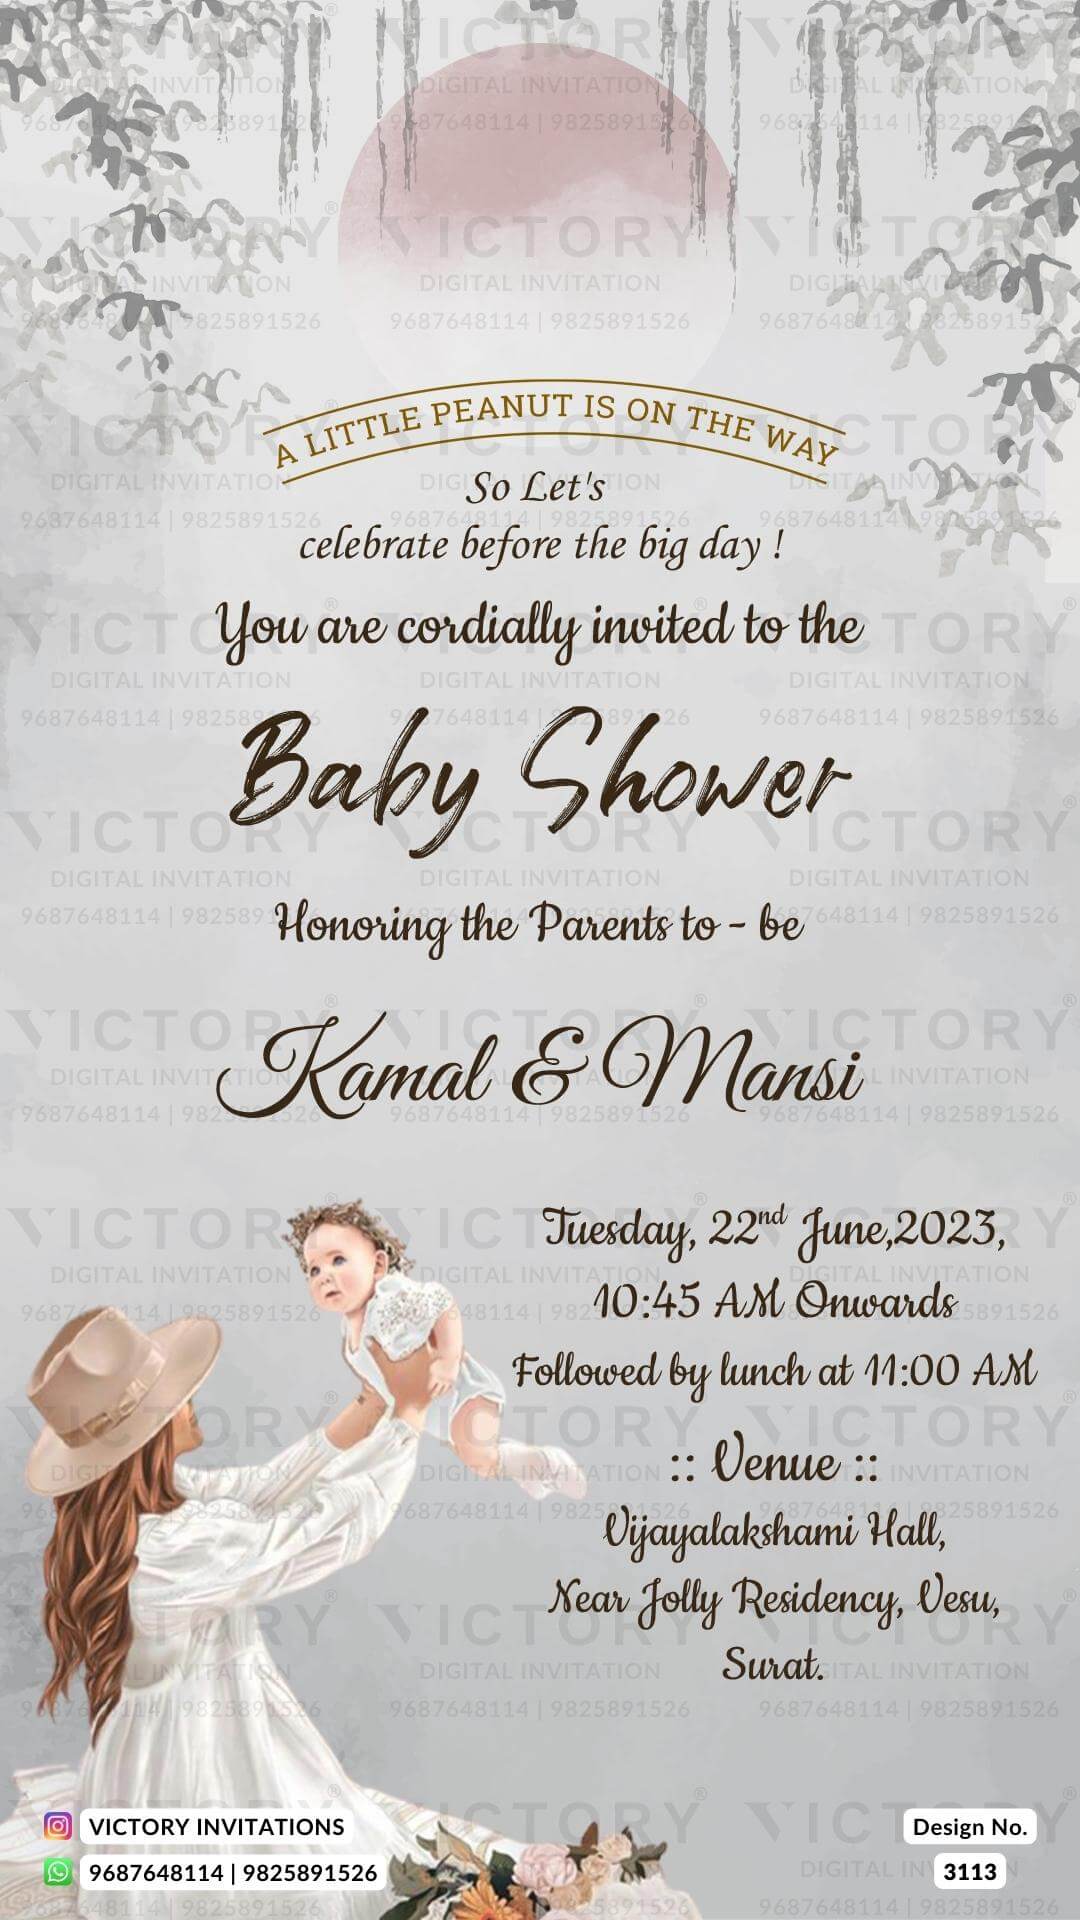 Baby Shower digital invitation card in english design no.3113